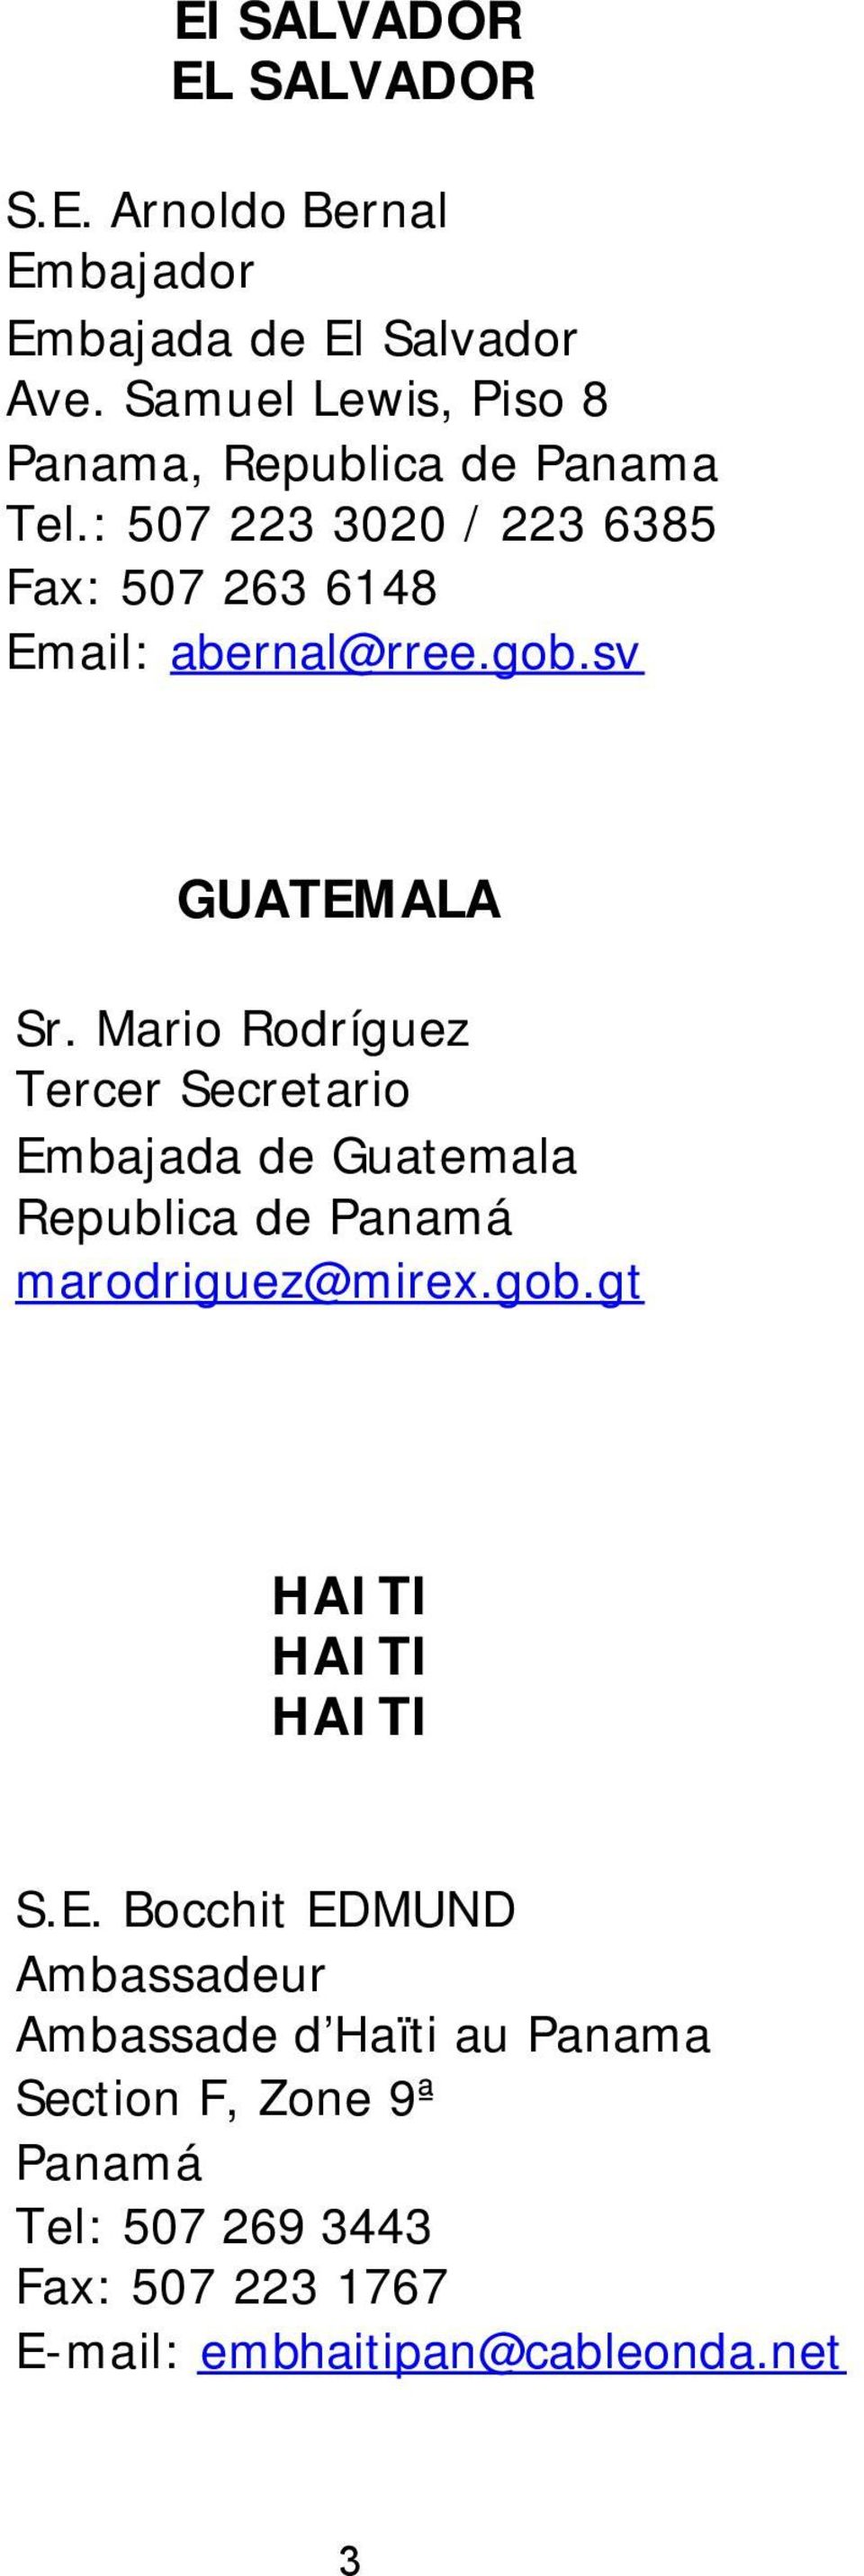 sv GUATEMALA Sr. Mario Rodríguez Tercer Secretario Embajada de Guatemala Republica de marodriguez@mirex.gob.